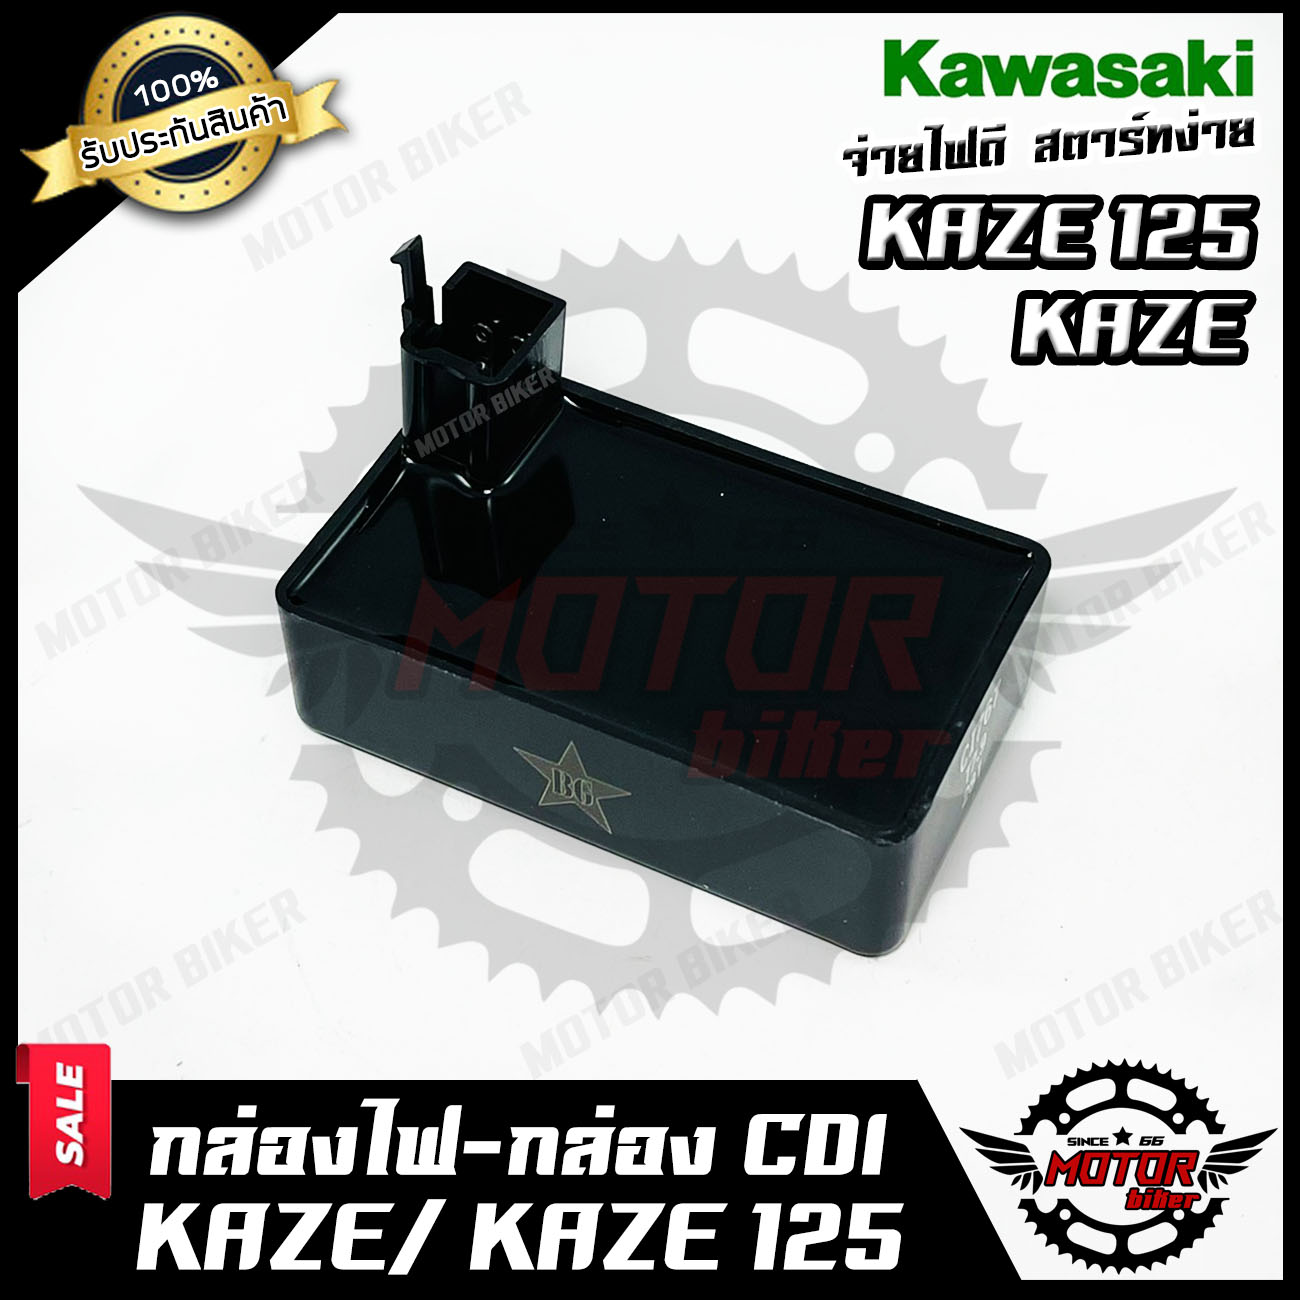 Kaze 112 อะไหล่ ราคาถูก ซื้อออนไลน์ที่ - พ.ค. 2022 | Lazada.co.th